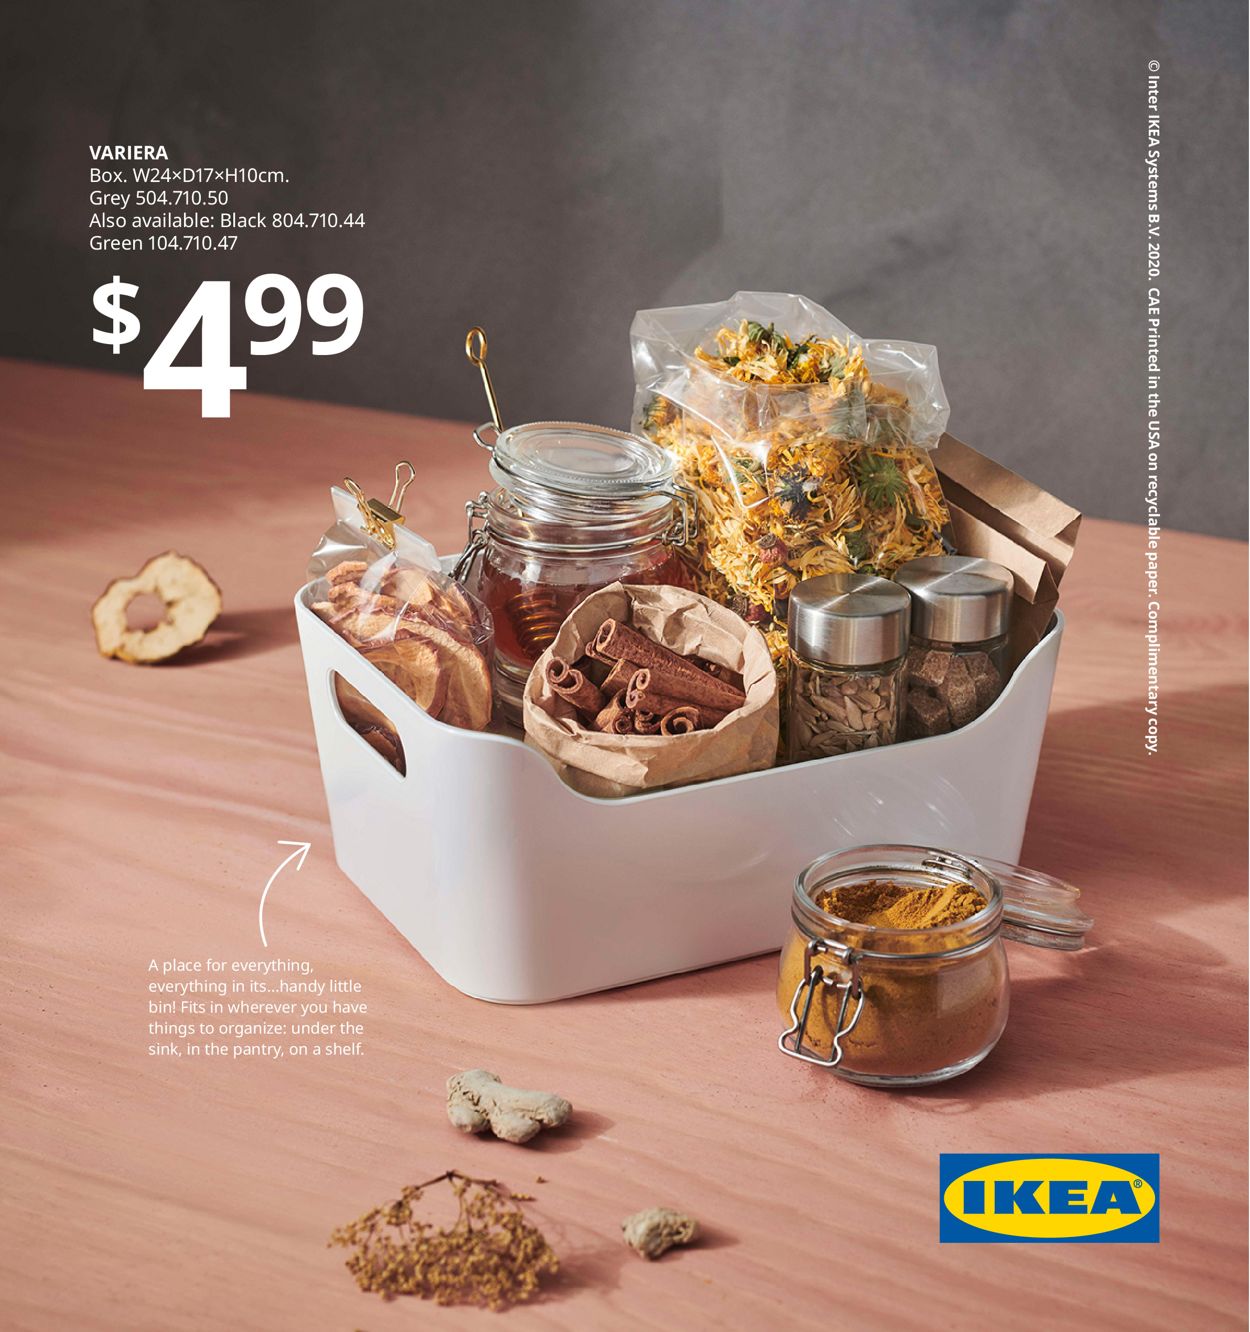 IKEA Flyer from 03/05/2021